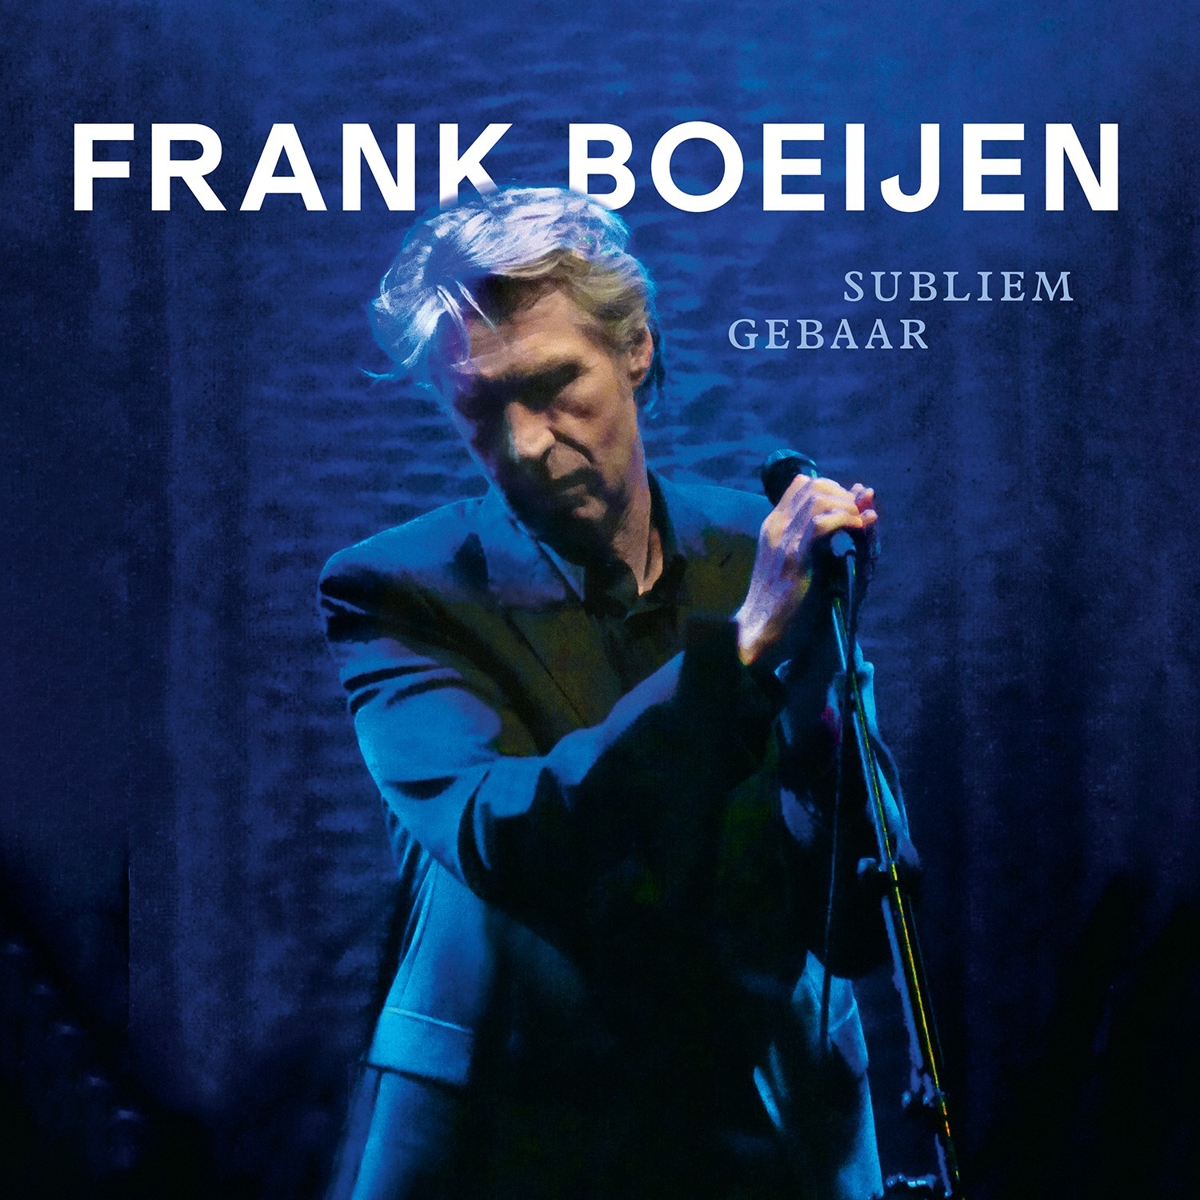 Frank Boeijen - Subliem Gebaar (Limited edition, blue vinyl) (LP)